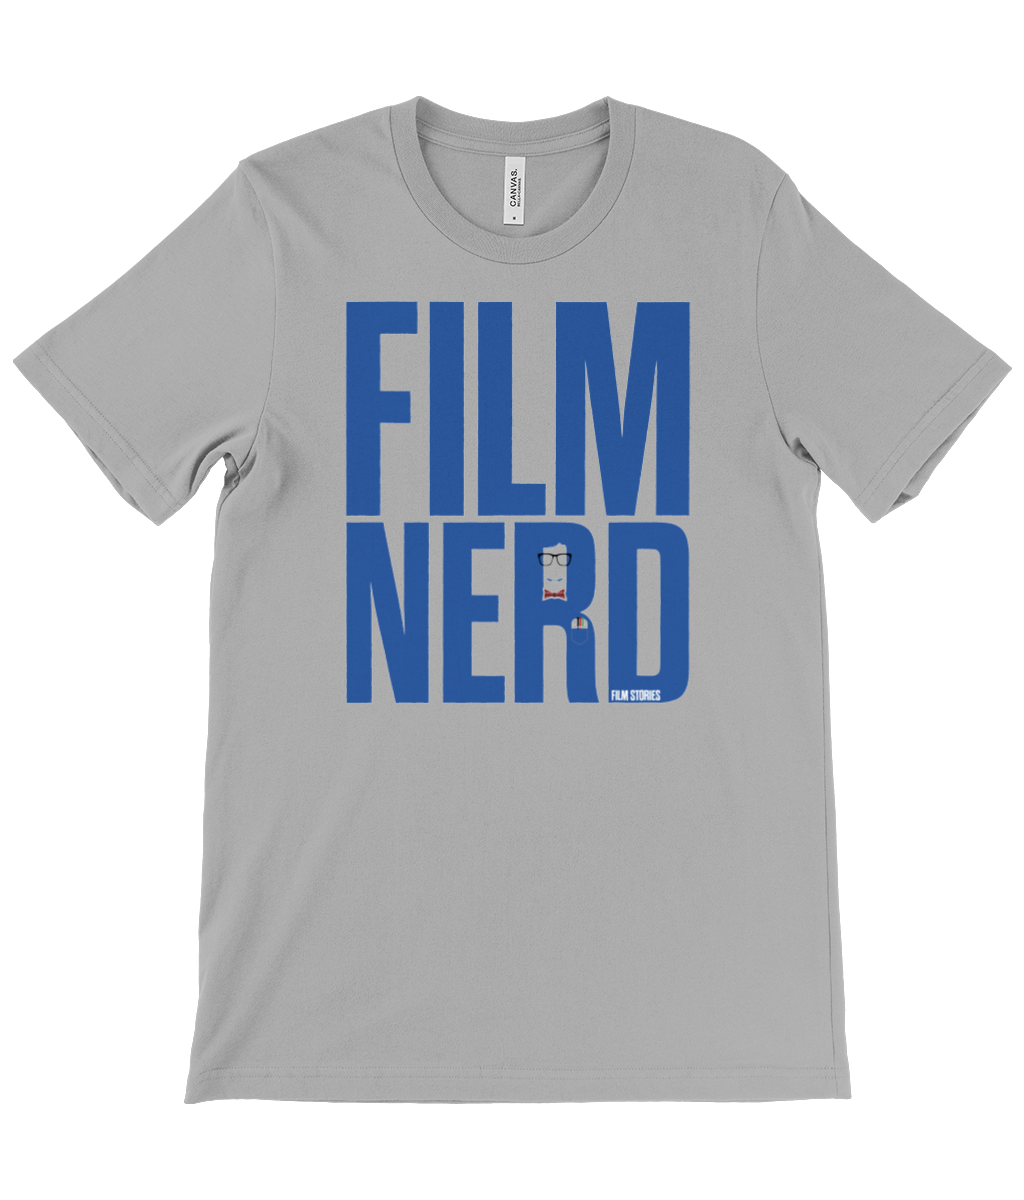 FILM NERD T-Shirt